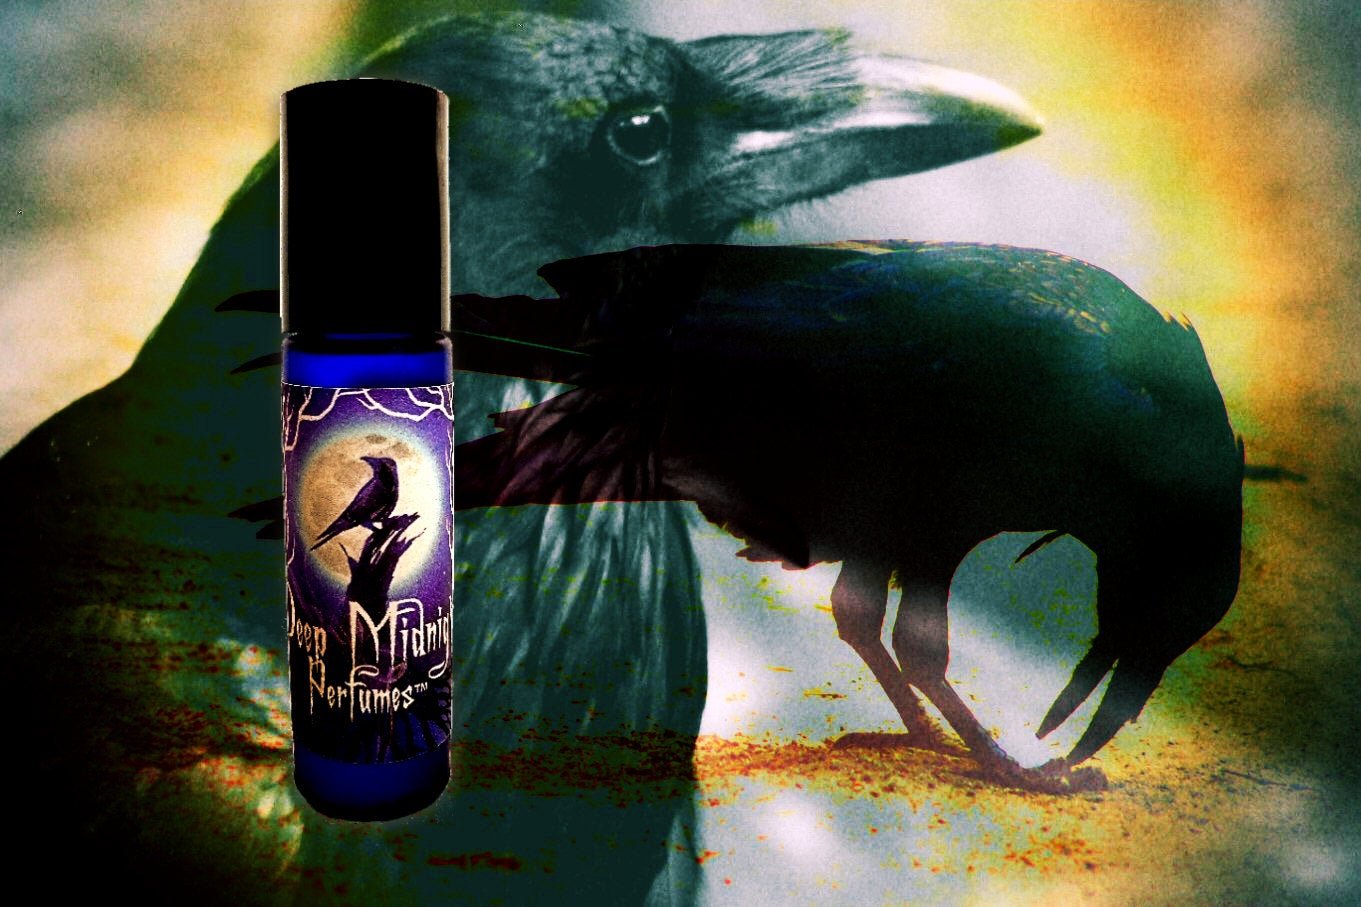 RAVEN BOY™ Perfume Oil - Inspired by Game of Thrones - oakmoss, musk, tobacco leaf, sage, dark vanilla sugar, amber, oak - Bran Stark